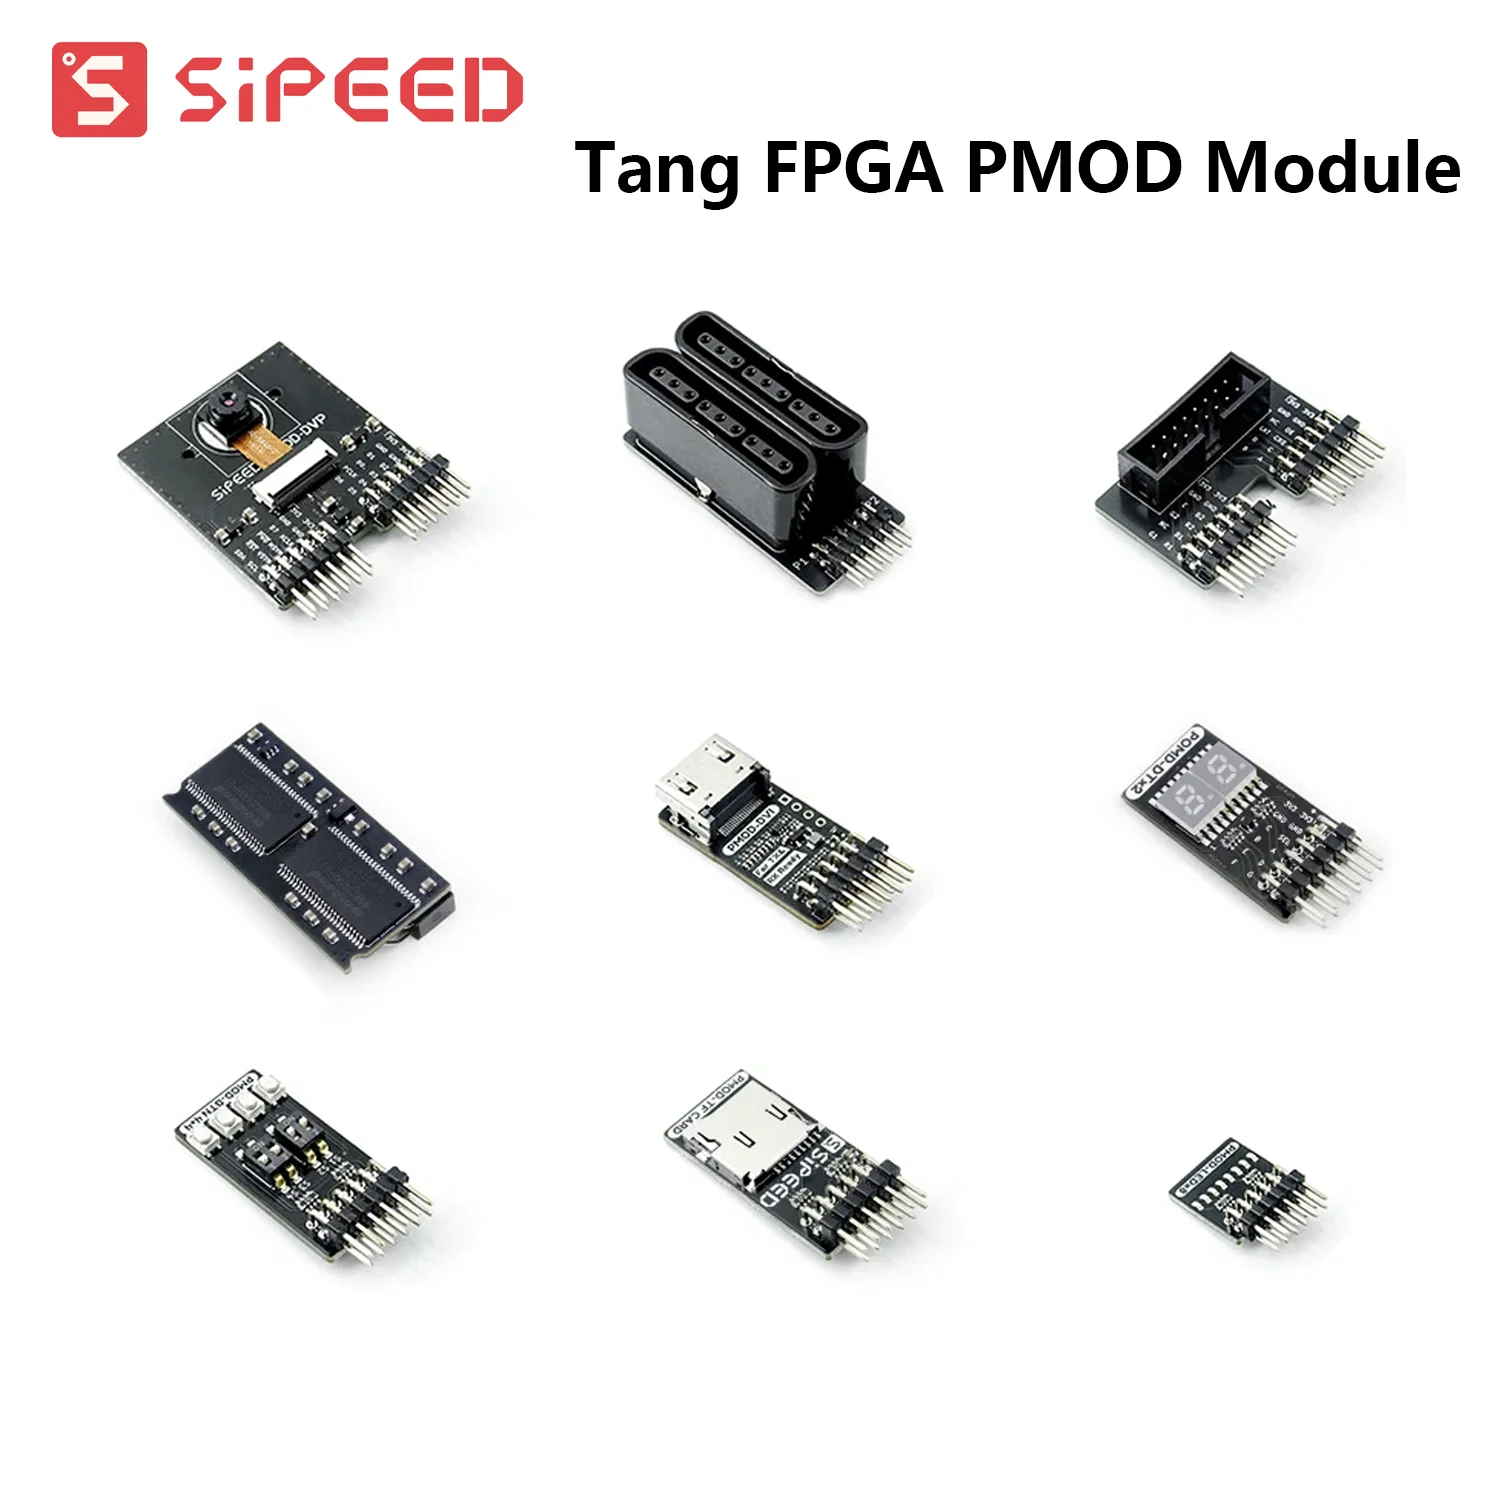 Sipeed Tang FPGA PMOD  LED ġ, HDMI ī޶  Ʃ, HUB75E, 20KDOCK, 25K, 138K ȣȯ 